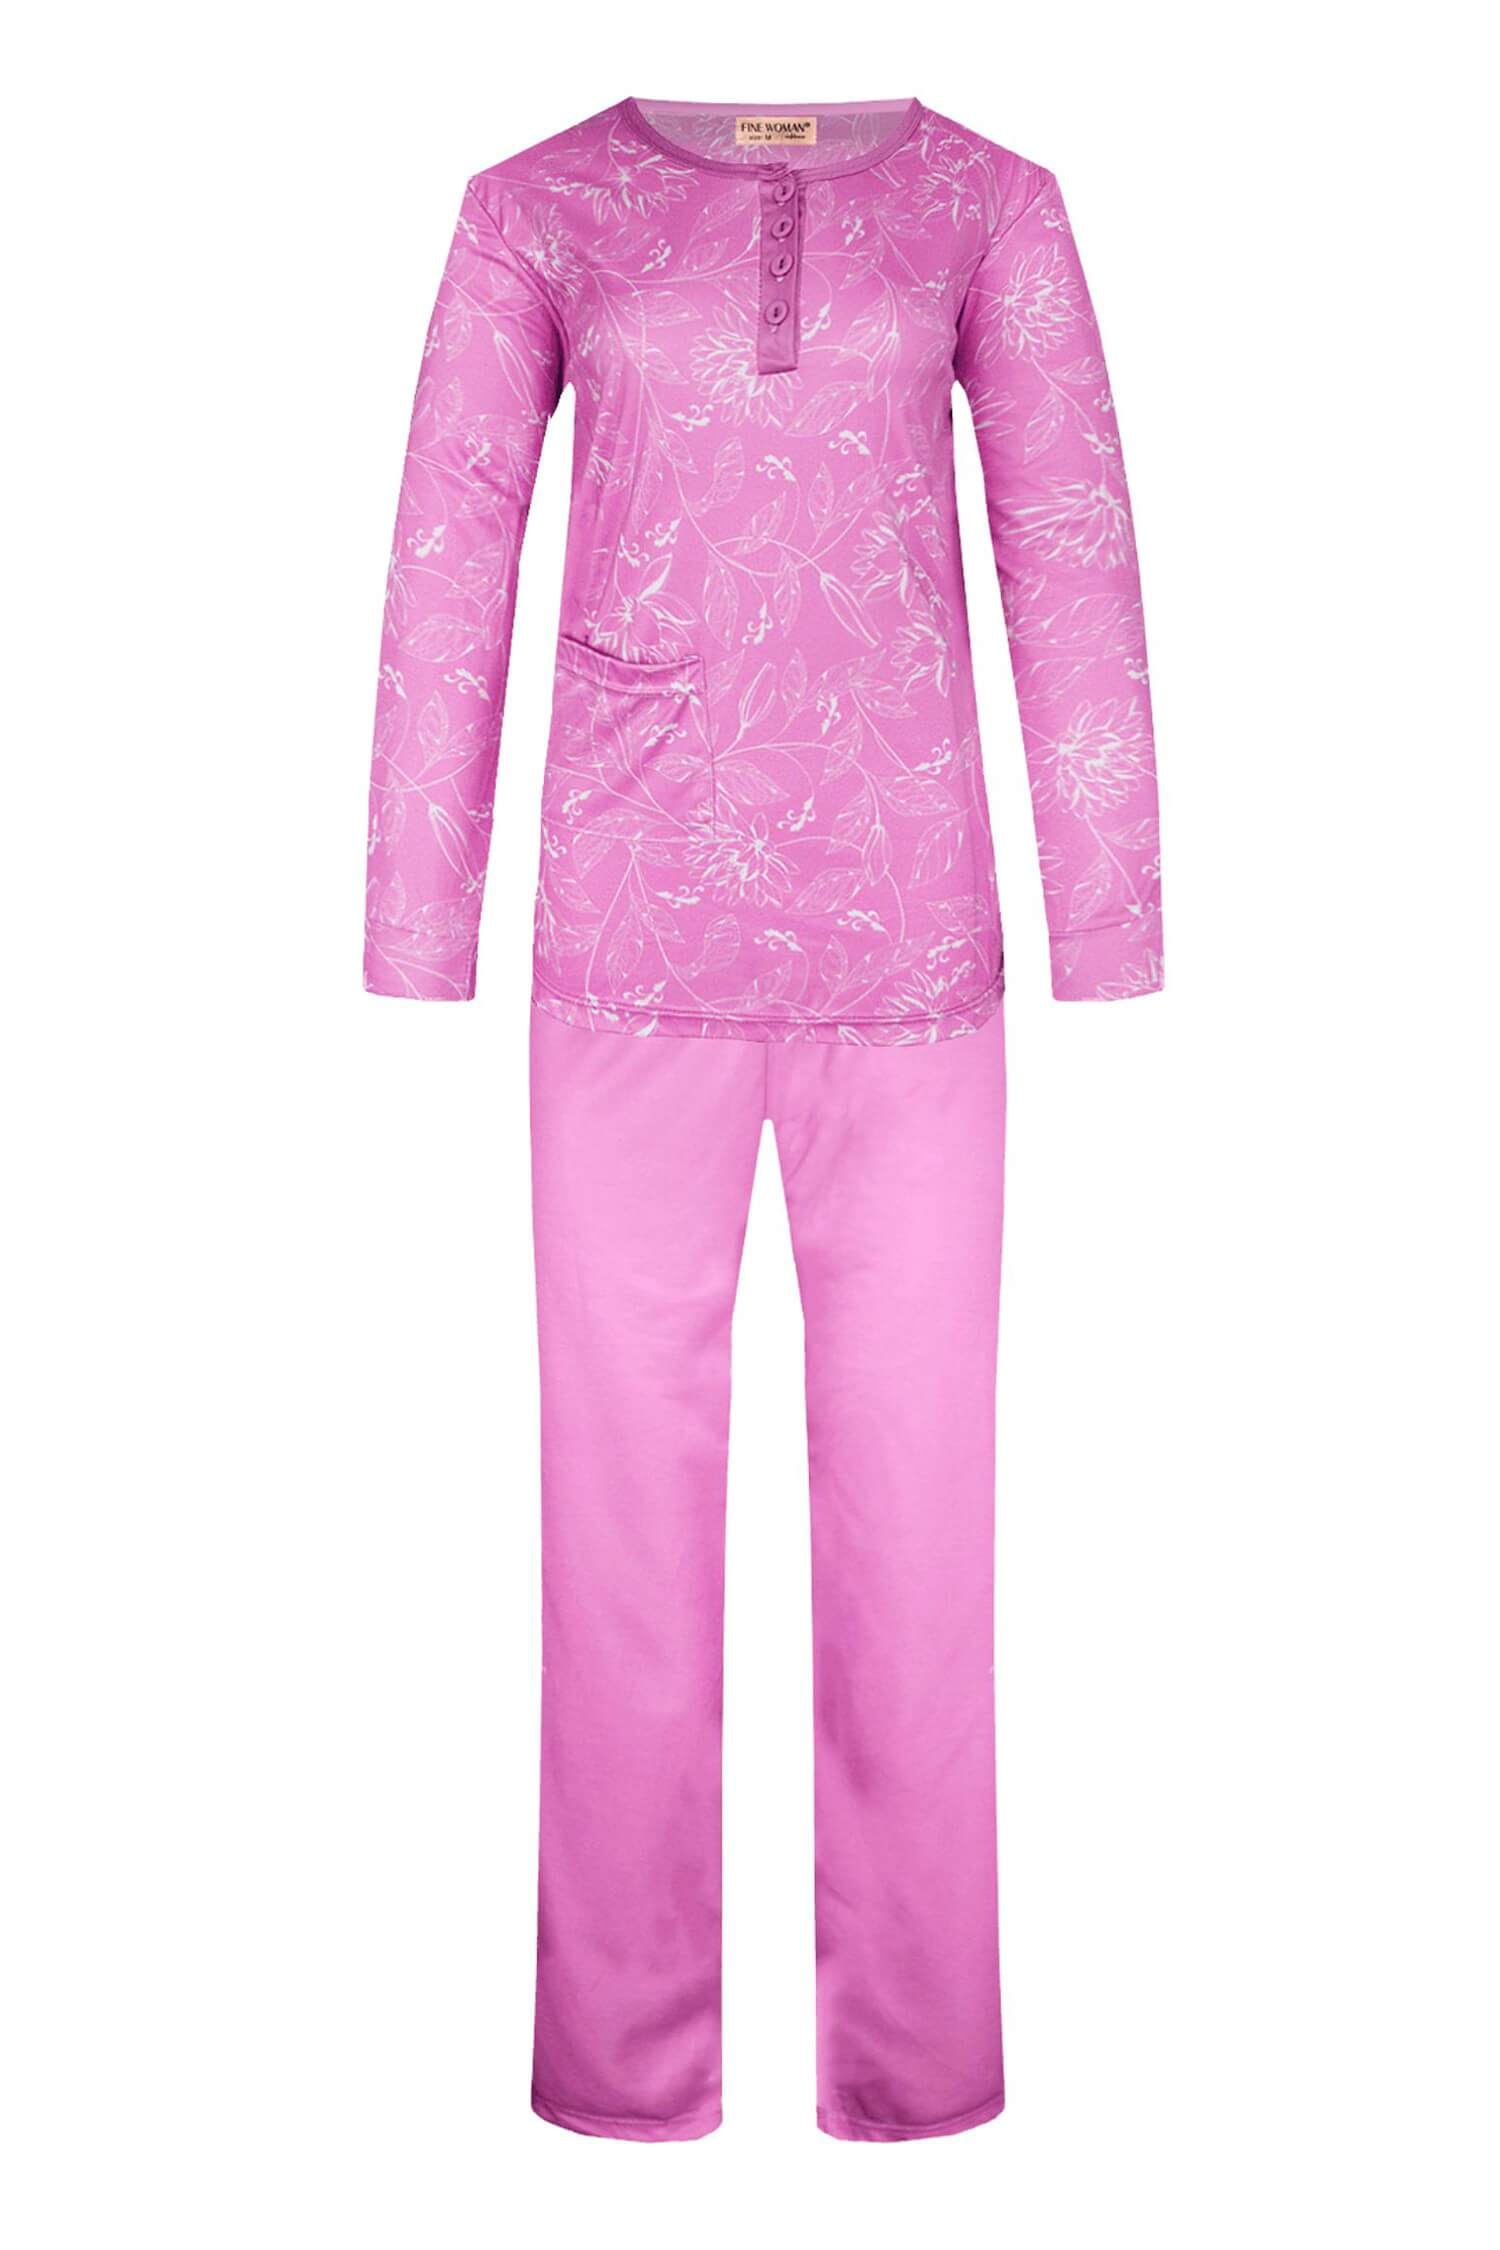 Sára dámské pyžamo dlouhý rukáv 2299 M růžová